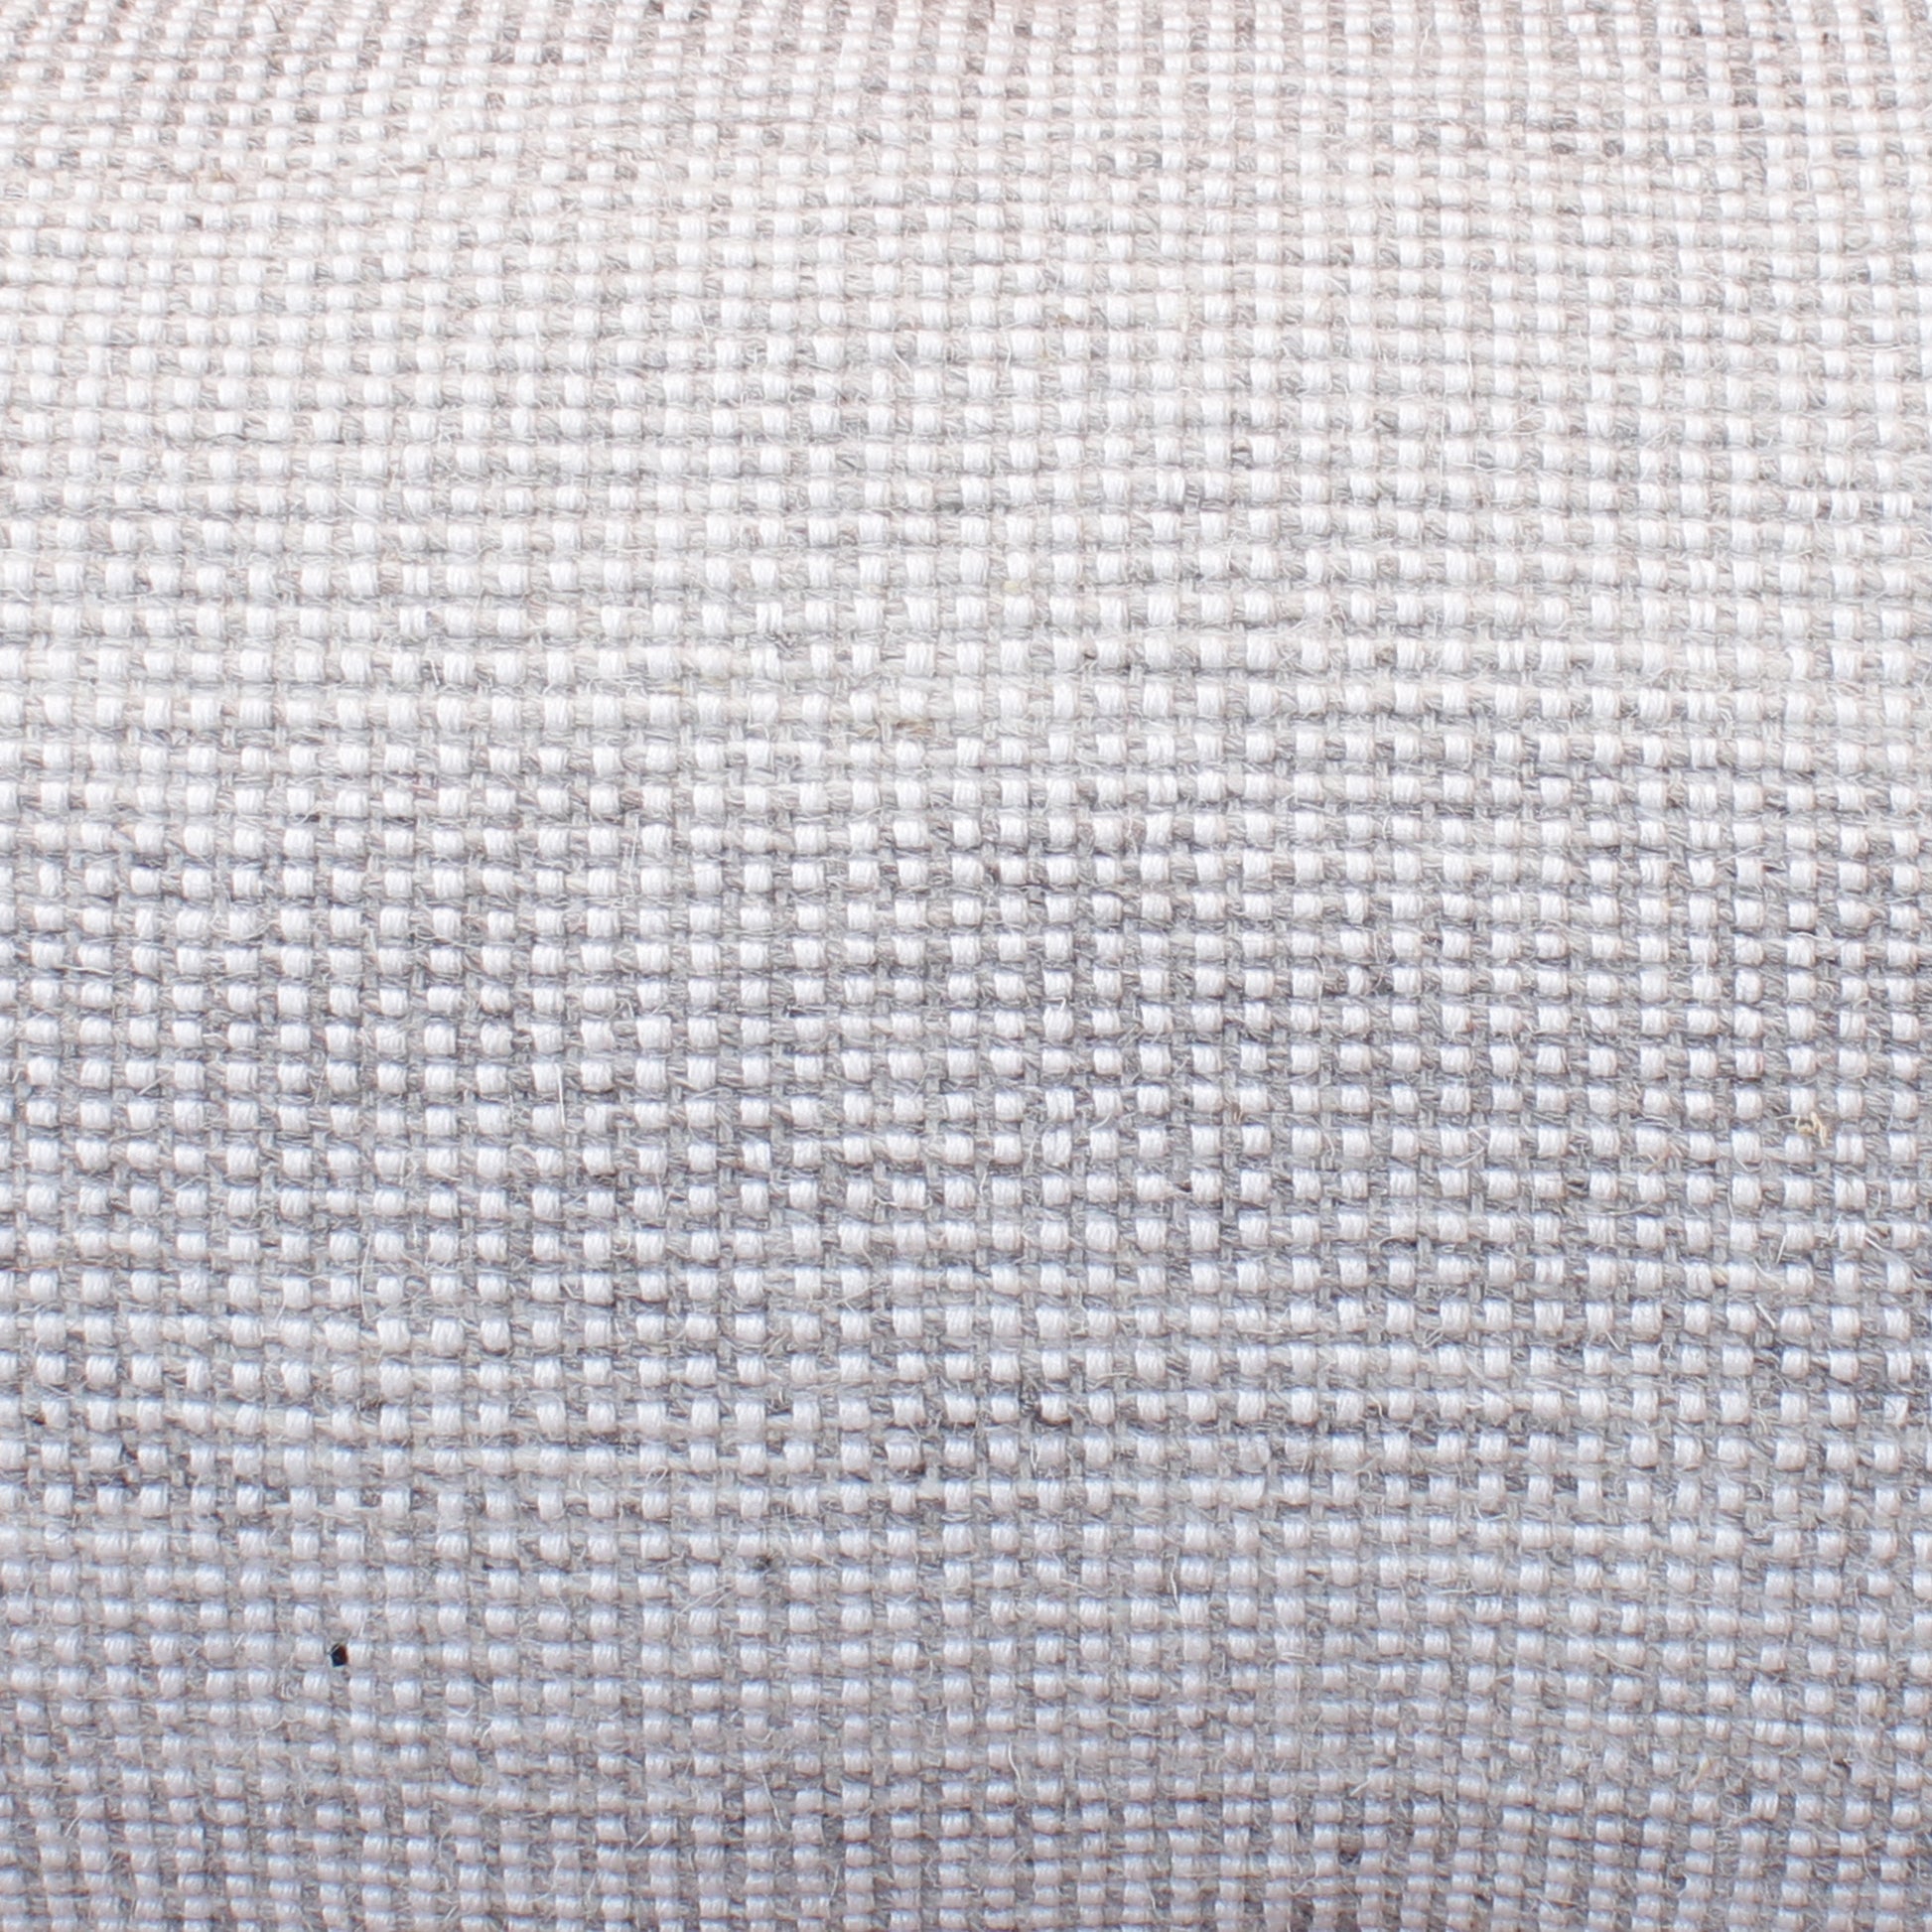 Backworth Lumber Cushion, 36x91 cm, Natural White, Wool, Hand Woven, Handwoven, Flat Weave